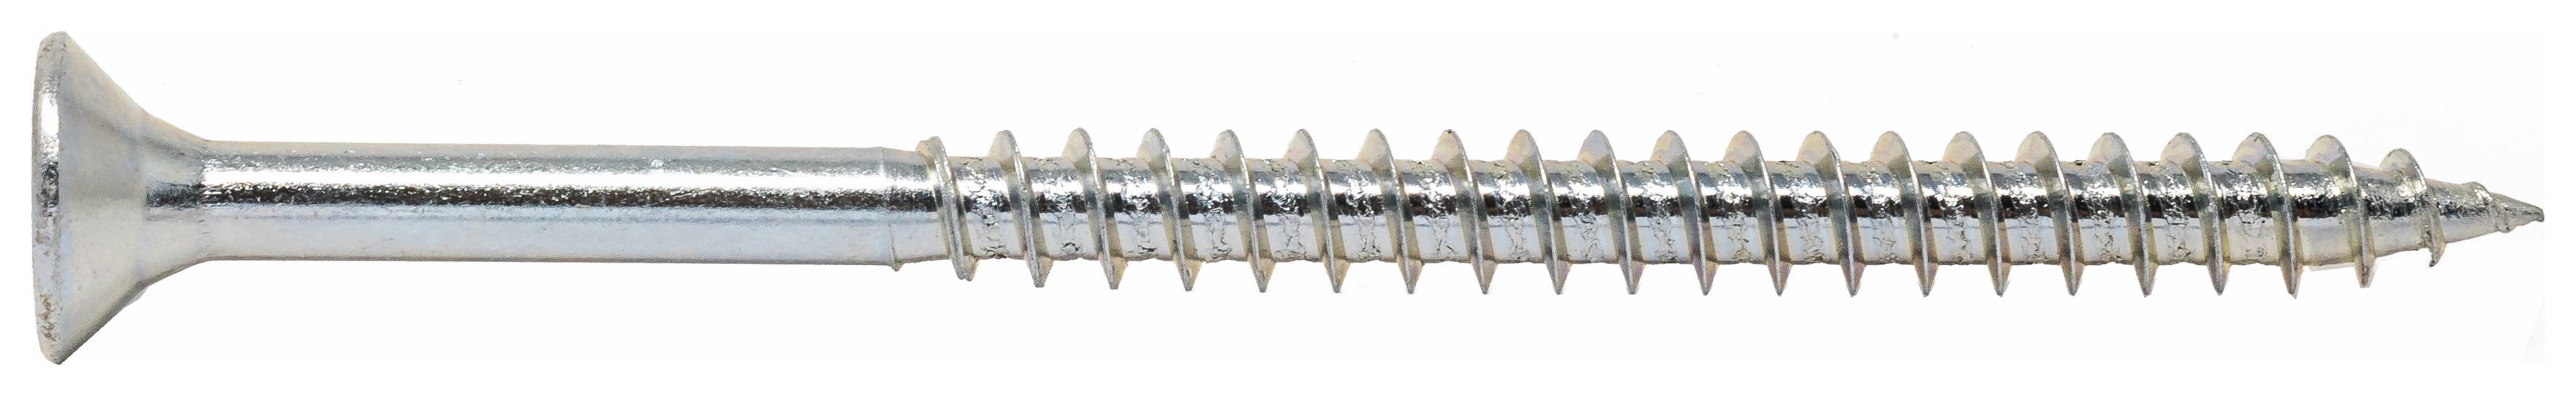 Wickes Single Thread Zinc Plated Screw - 3.5